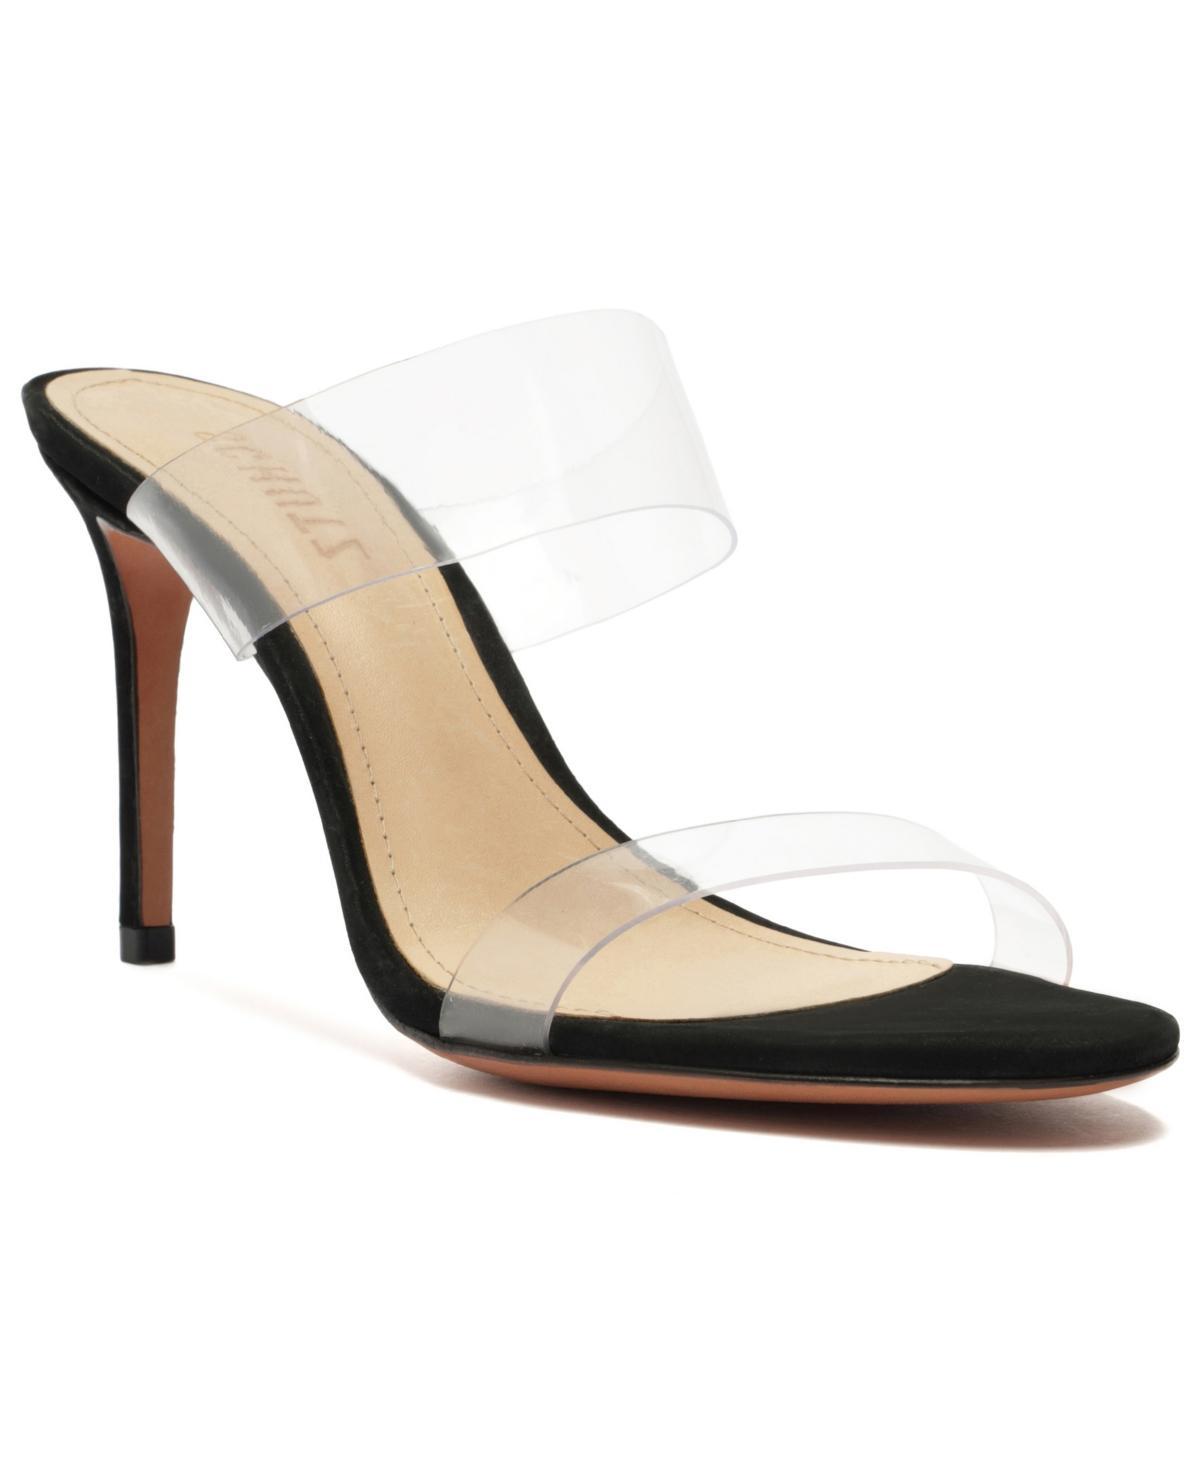 Schutz Womens Ariella High Stiletto Sandals Womens Shoes Product Image